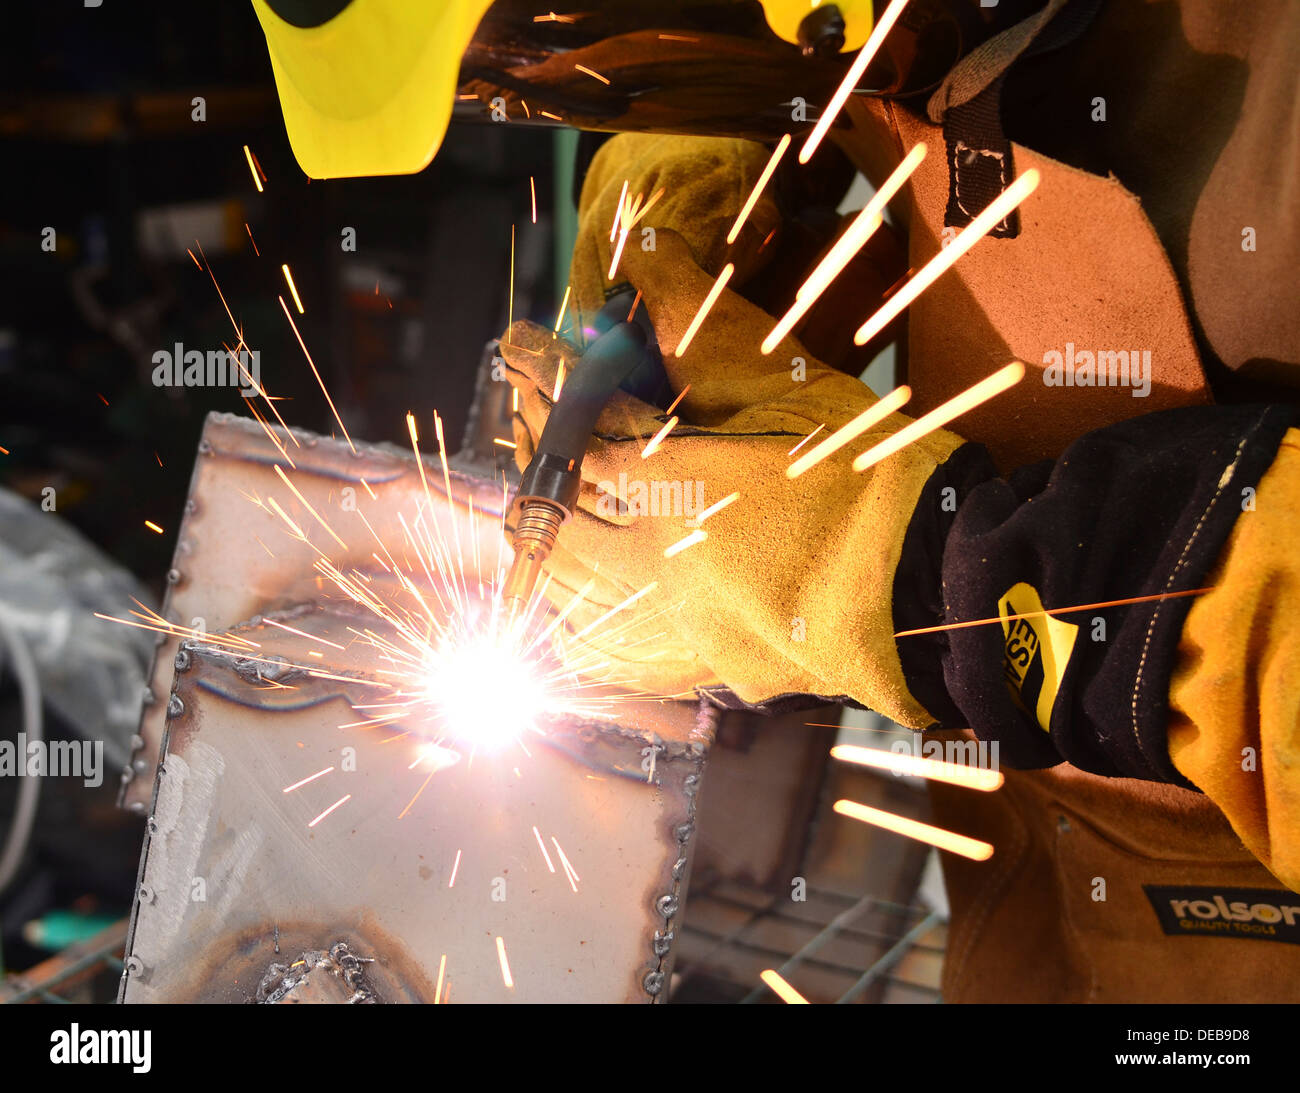 Welder mig welding a sculpture using flux core wire Stock Photo